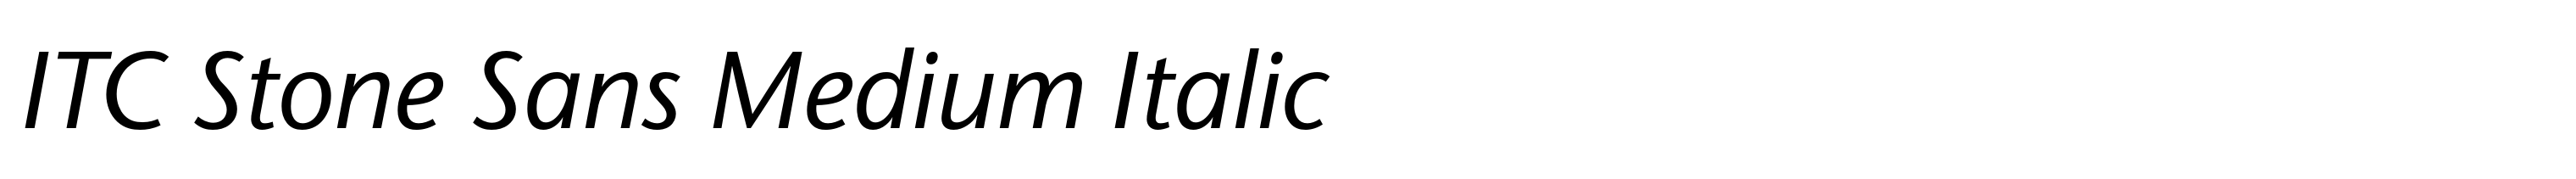 ITC Stone Sans Medium Italic